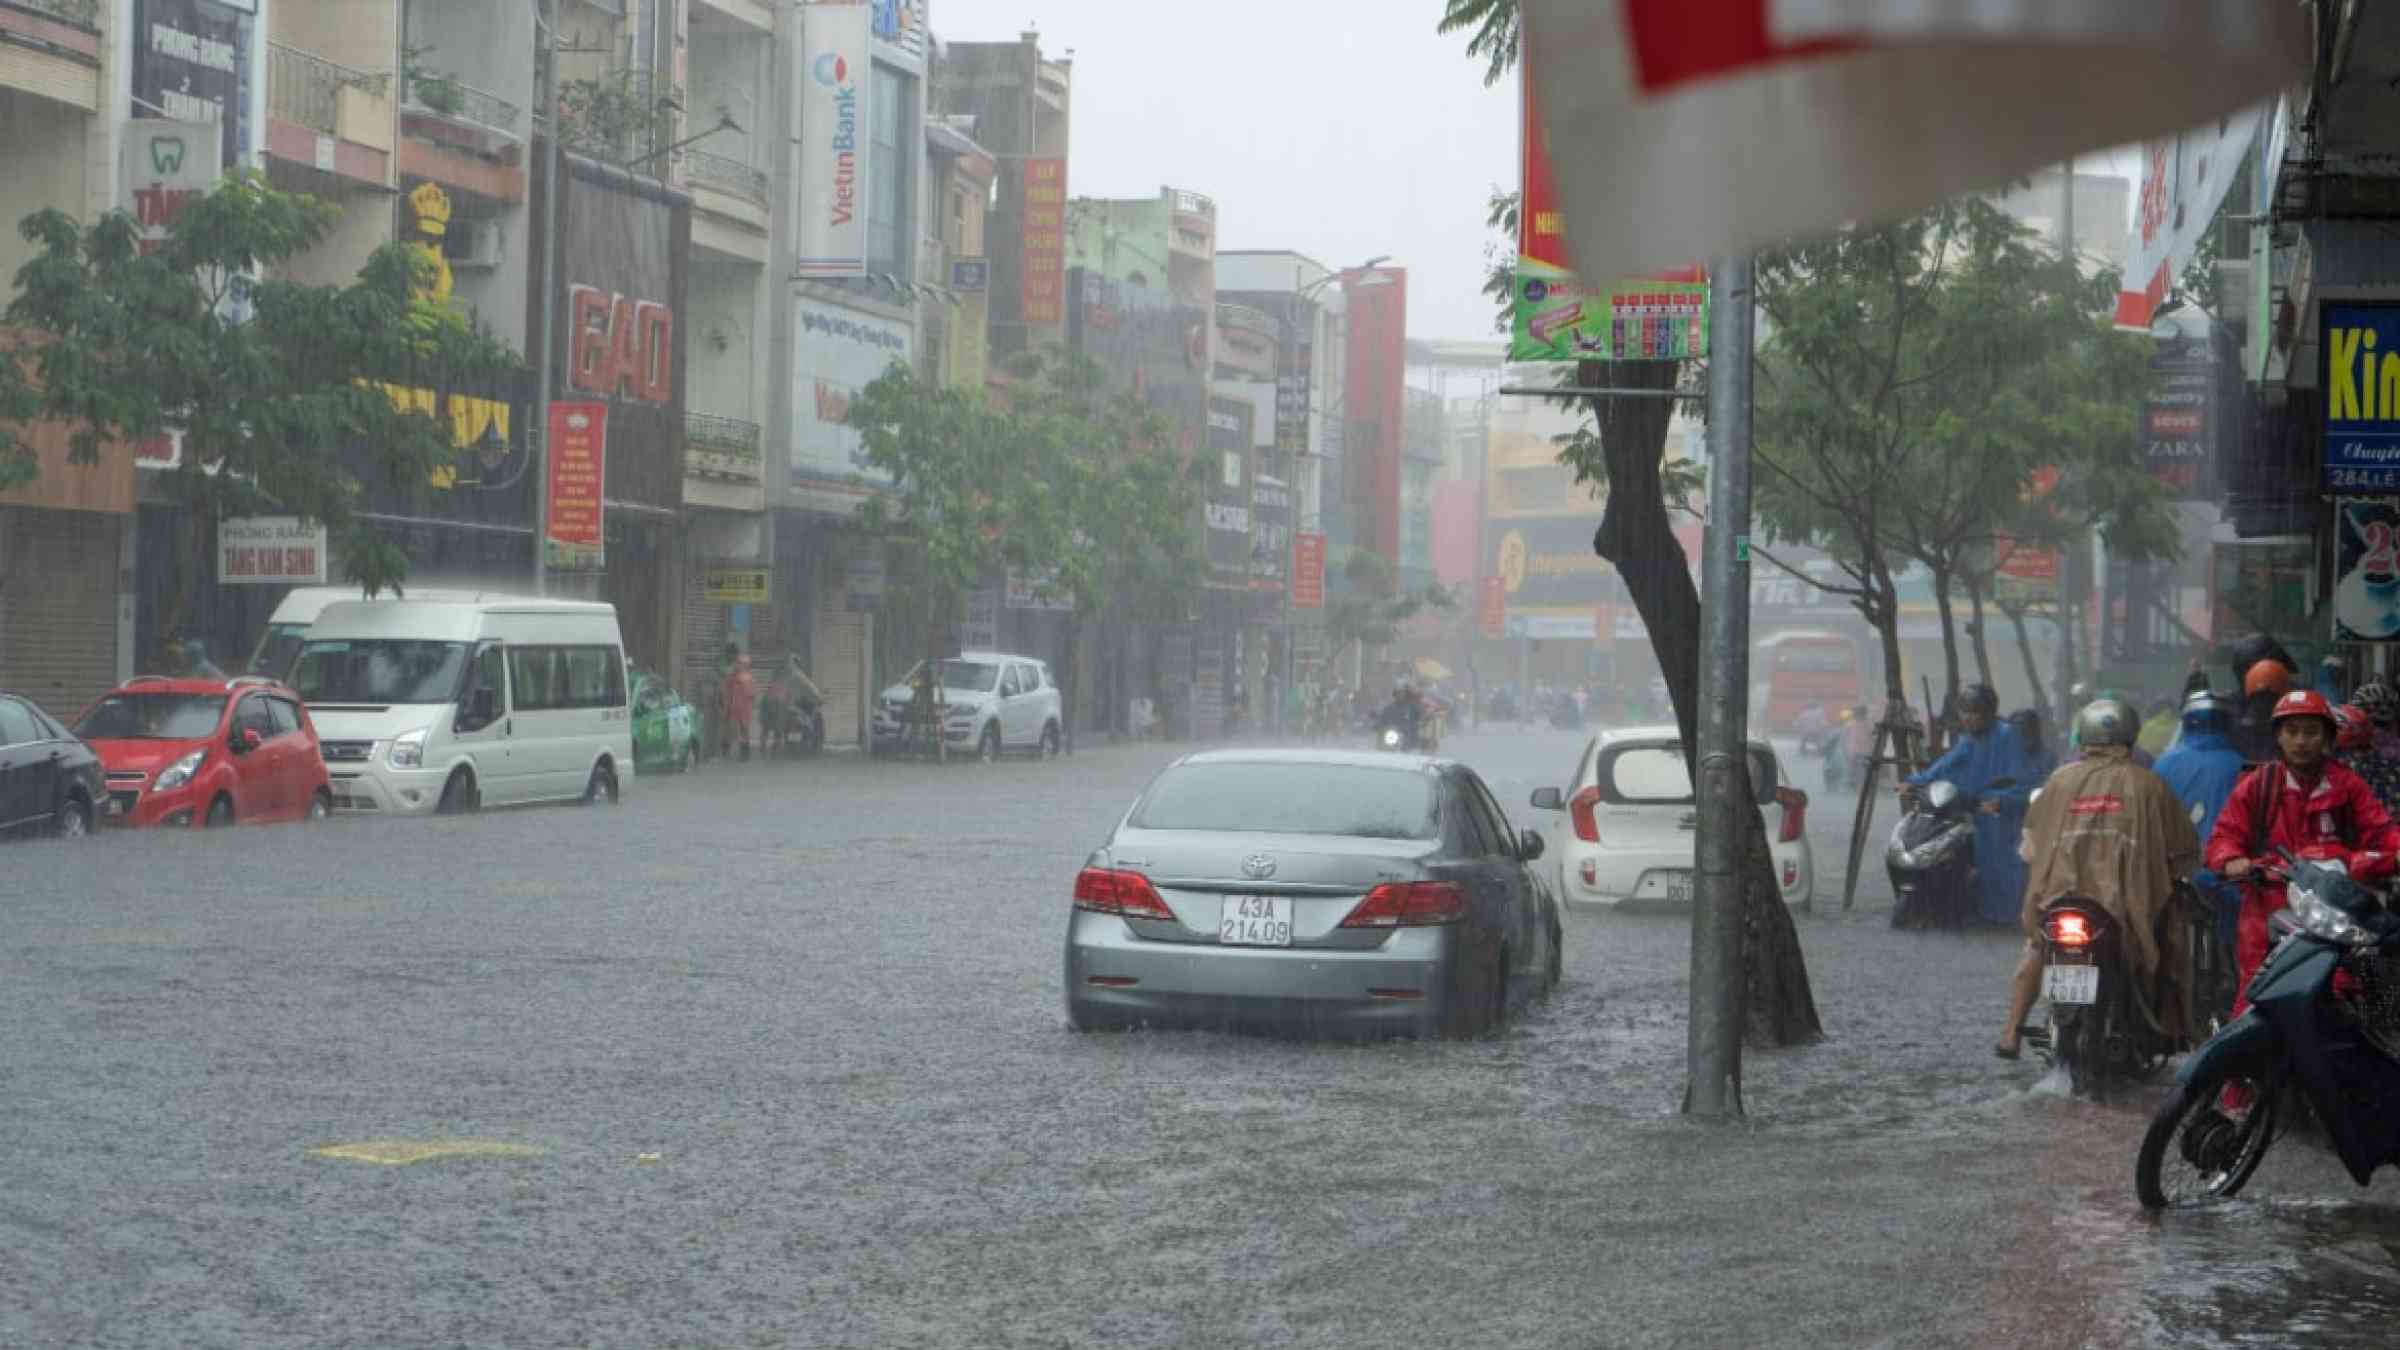 A flooded street in Da Nang, Vietnam during heavy typhoon rains